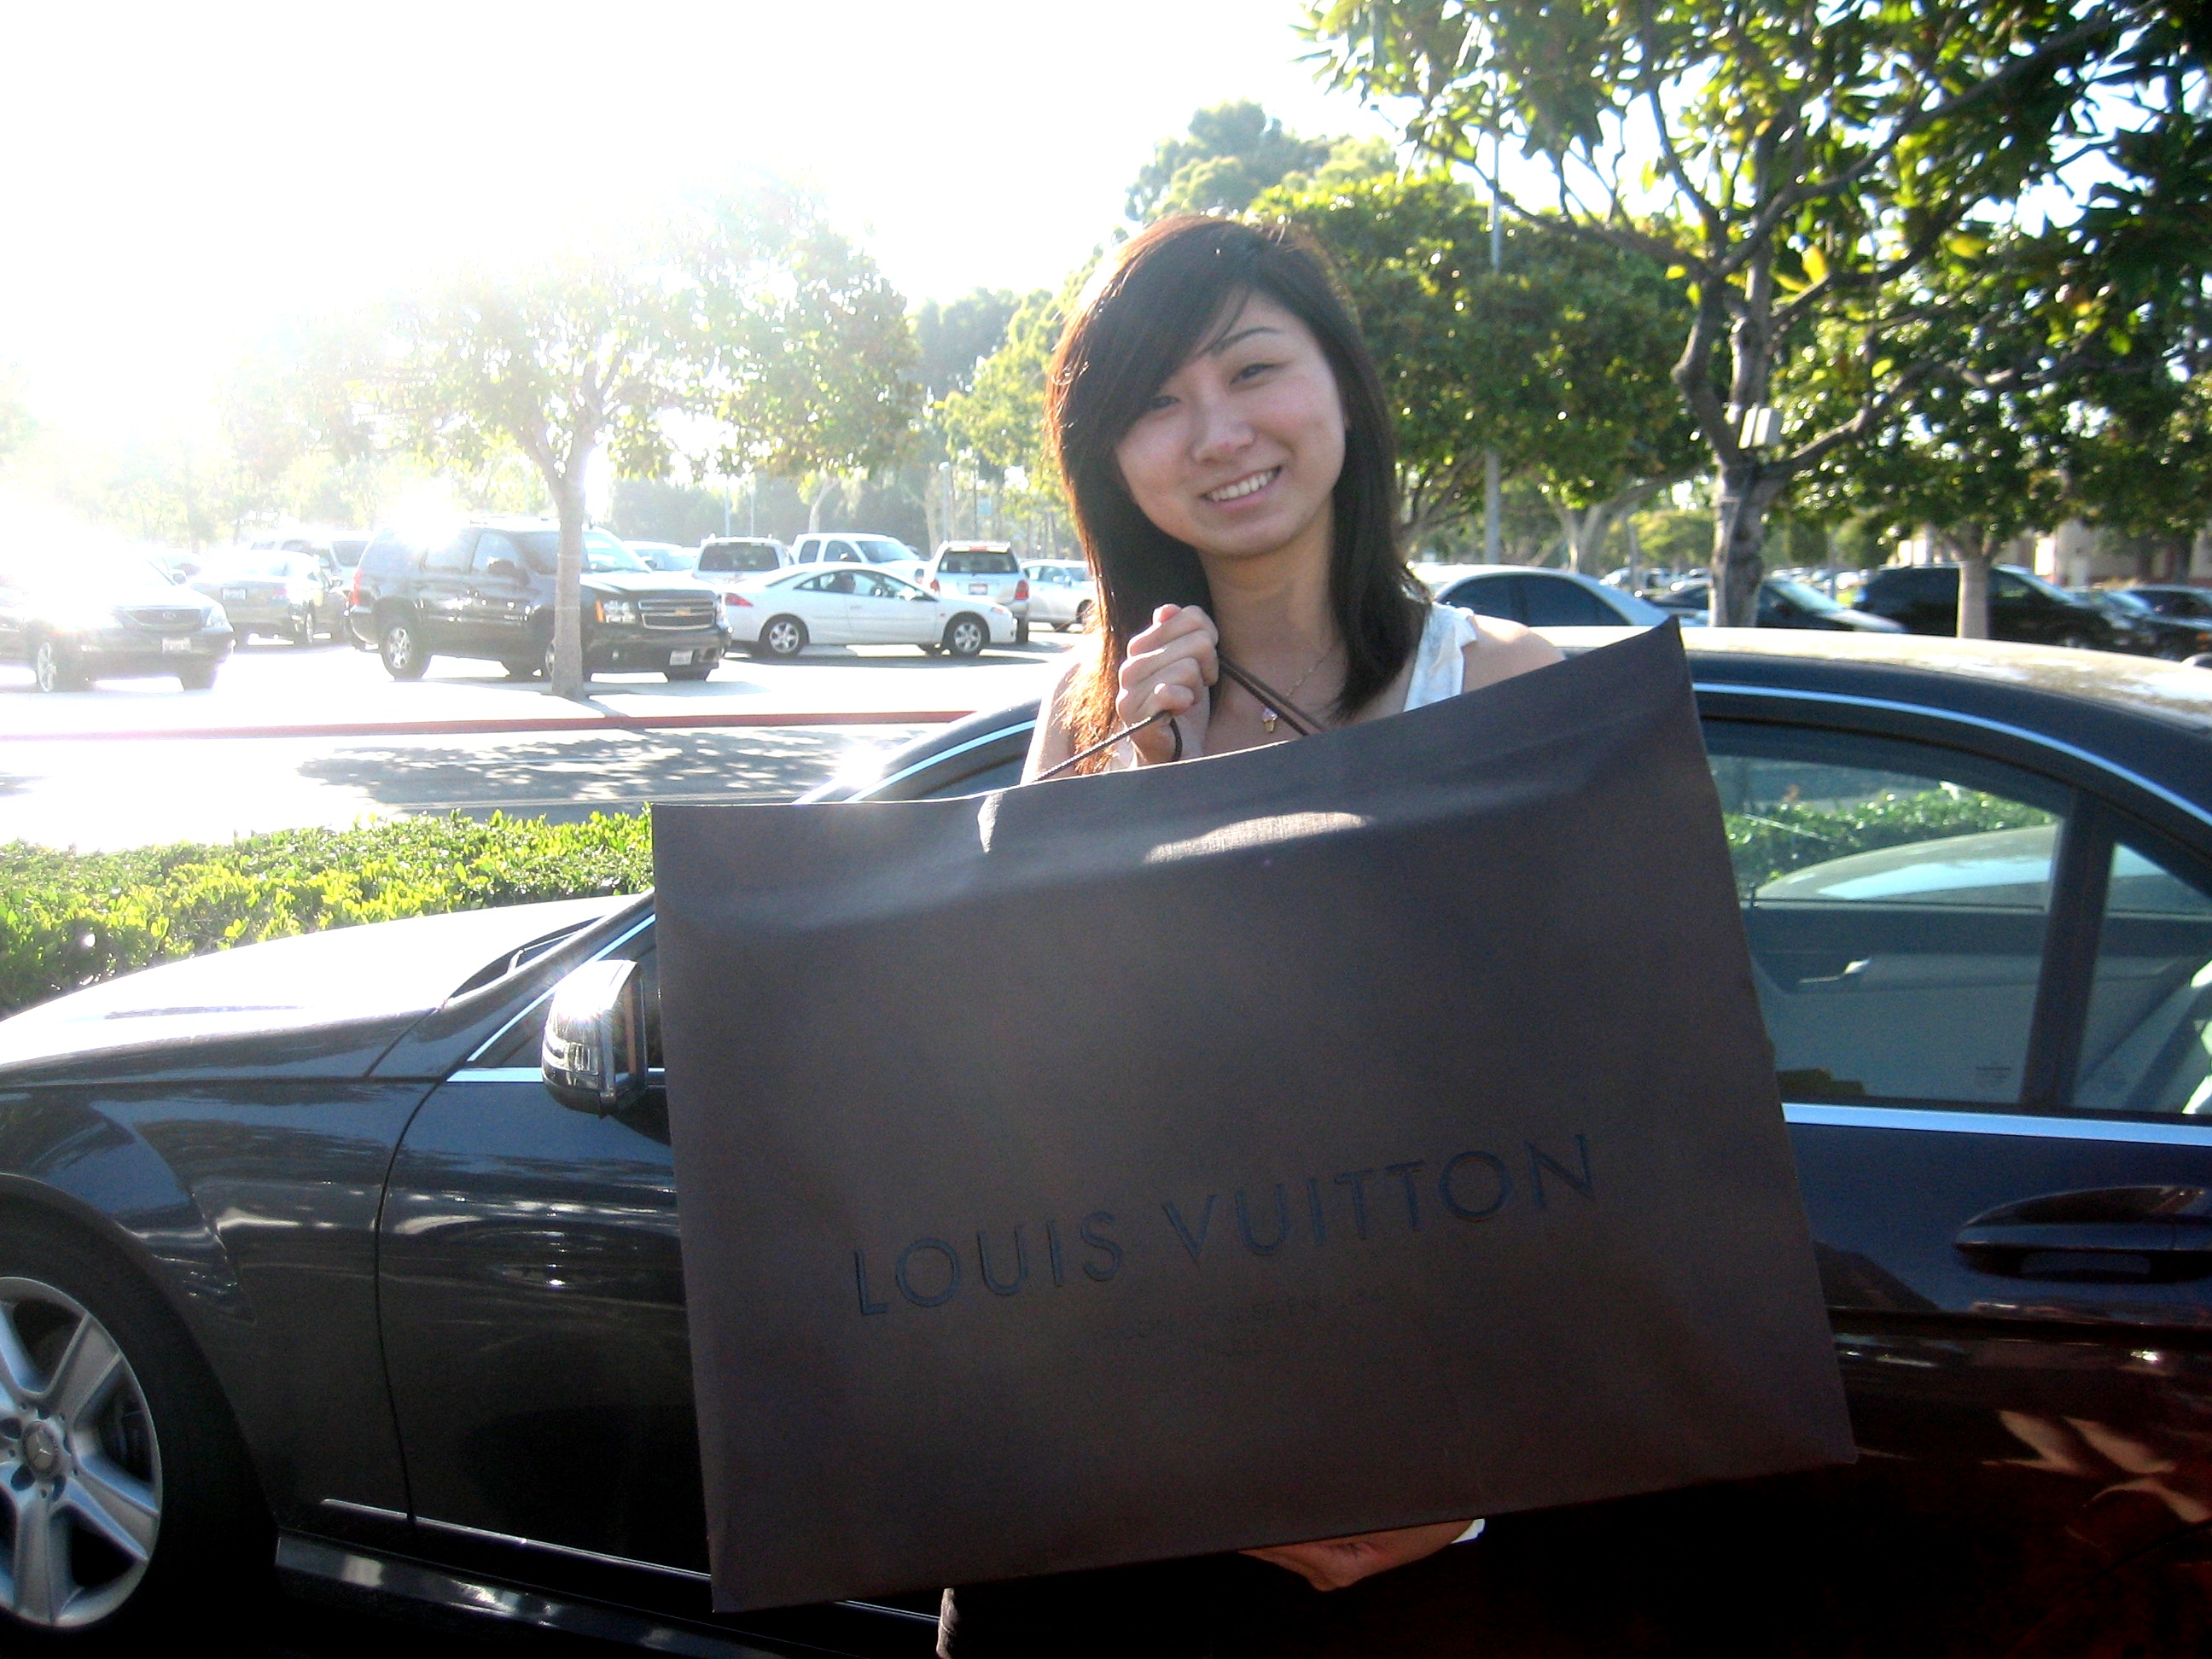 Louis Vuitton, Bags, Gorgeous Trevi Pm